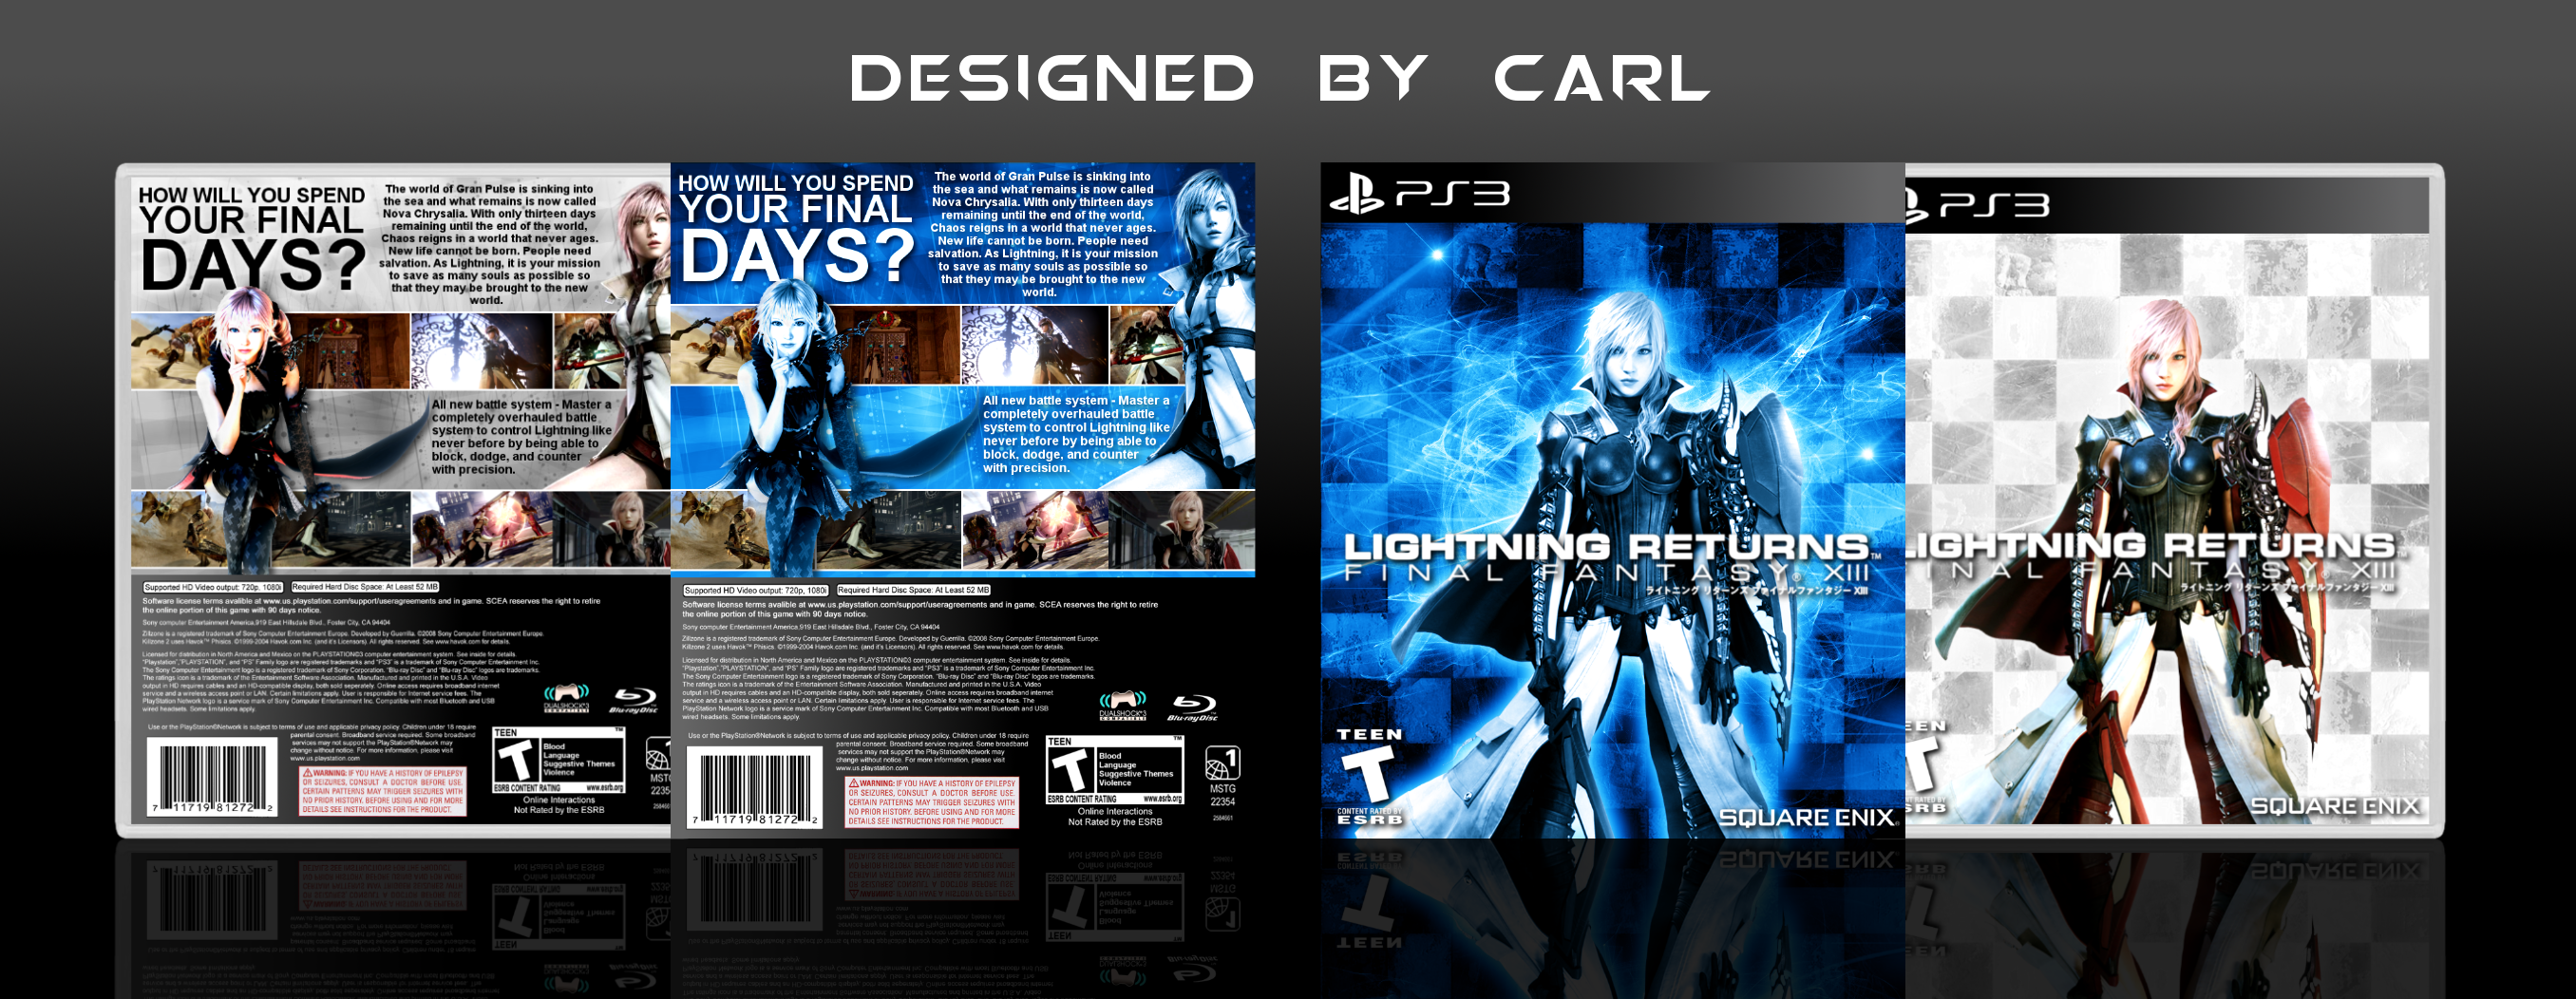 download lightning returns final fantasy xiii metacritic for free